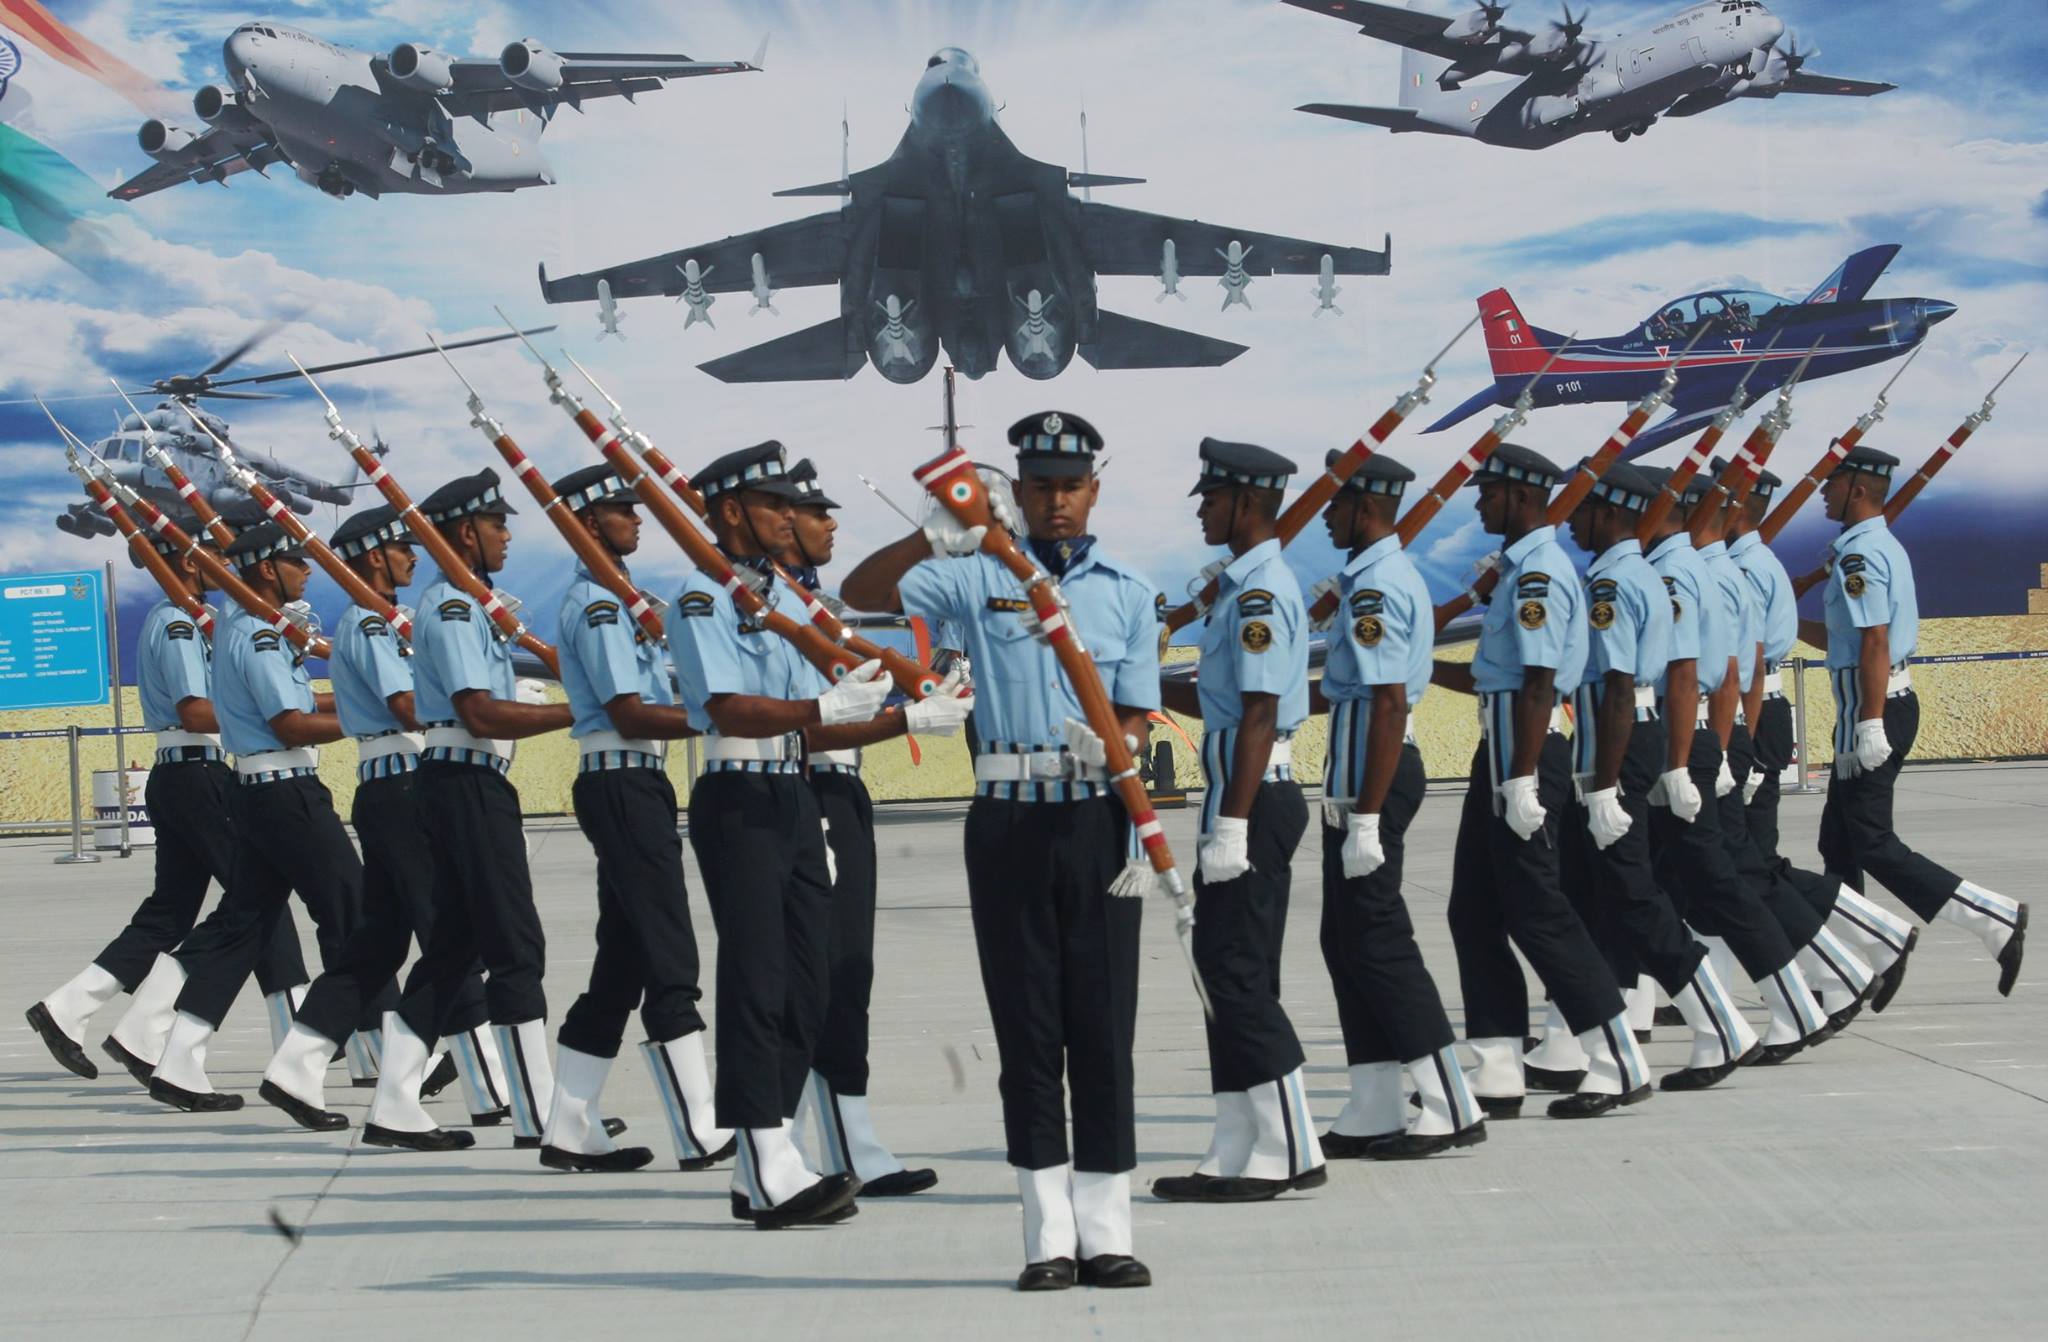 Indian Air Force Recruitment